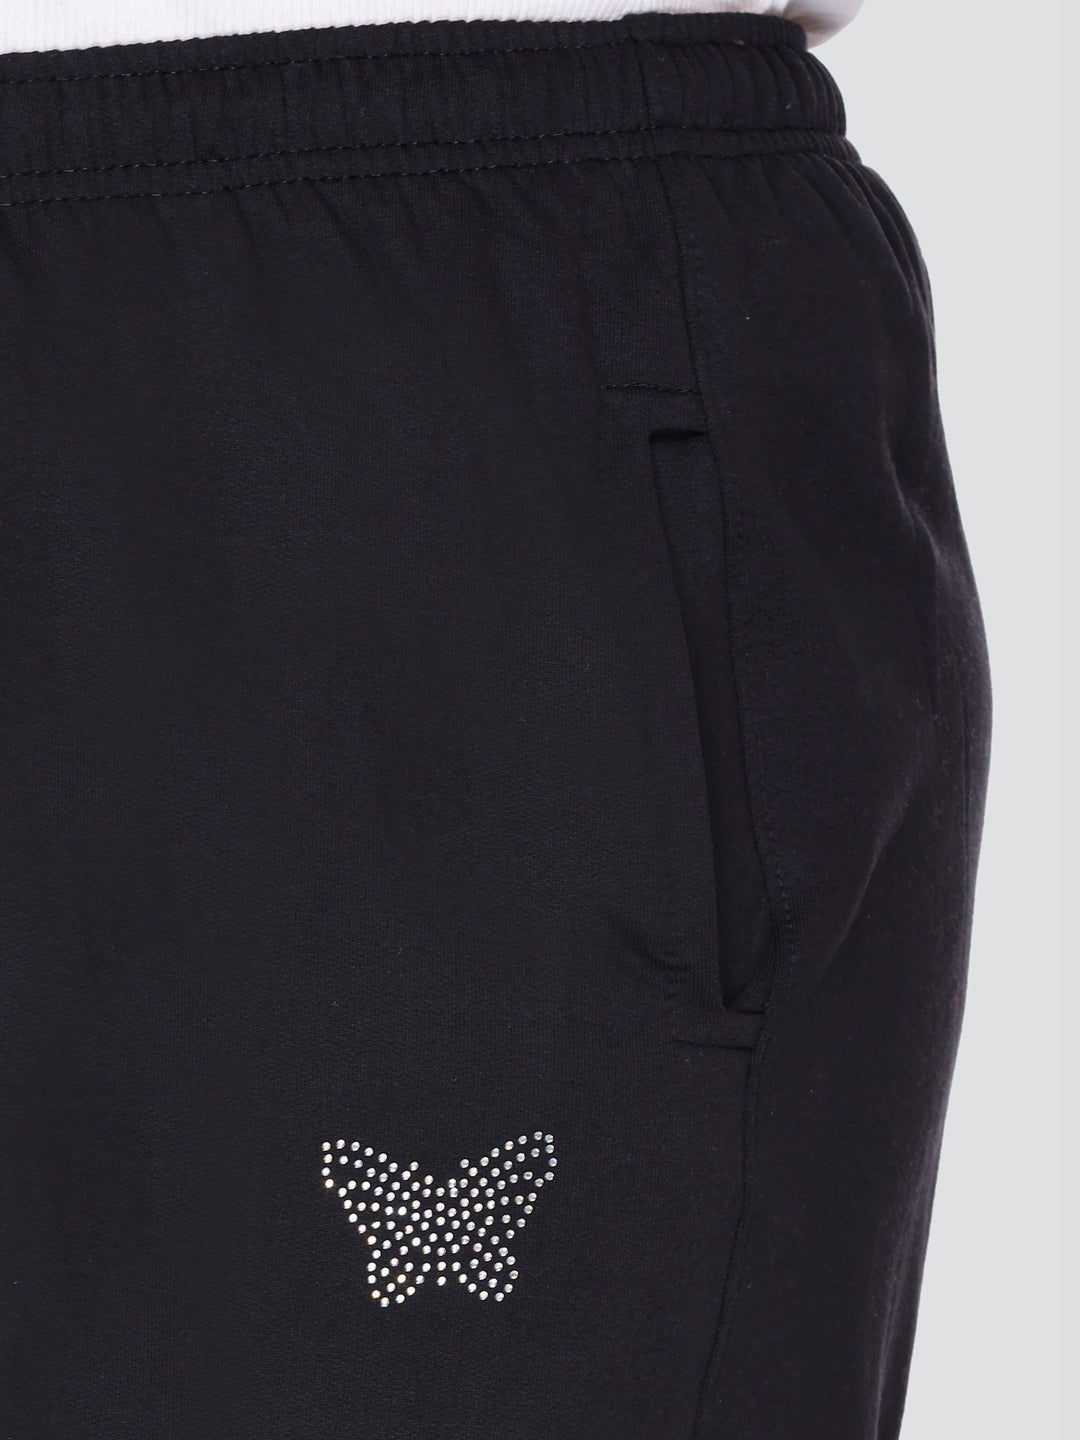 Plus Size Winters Cozy Fleece Track Pants For Women - Black